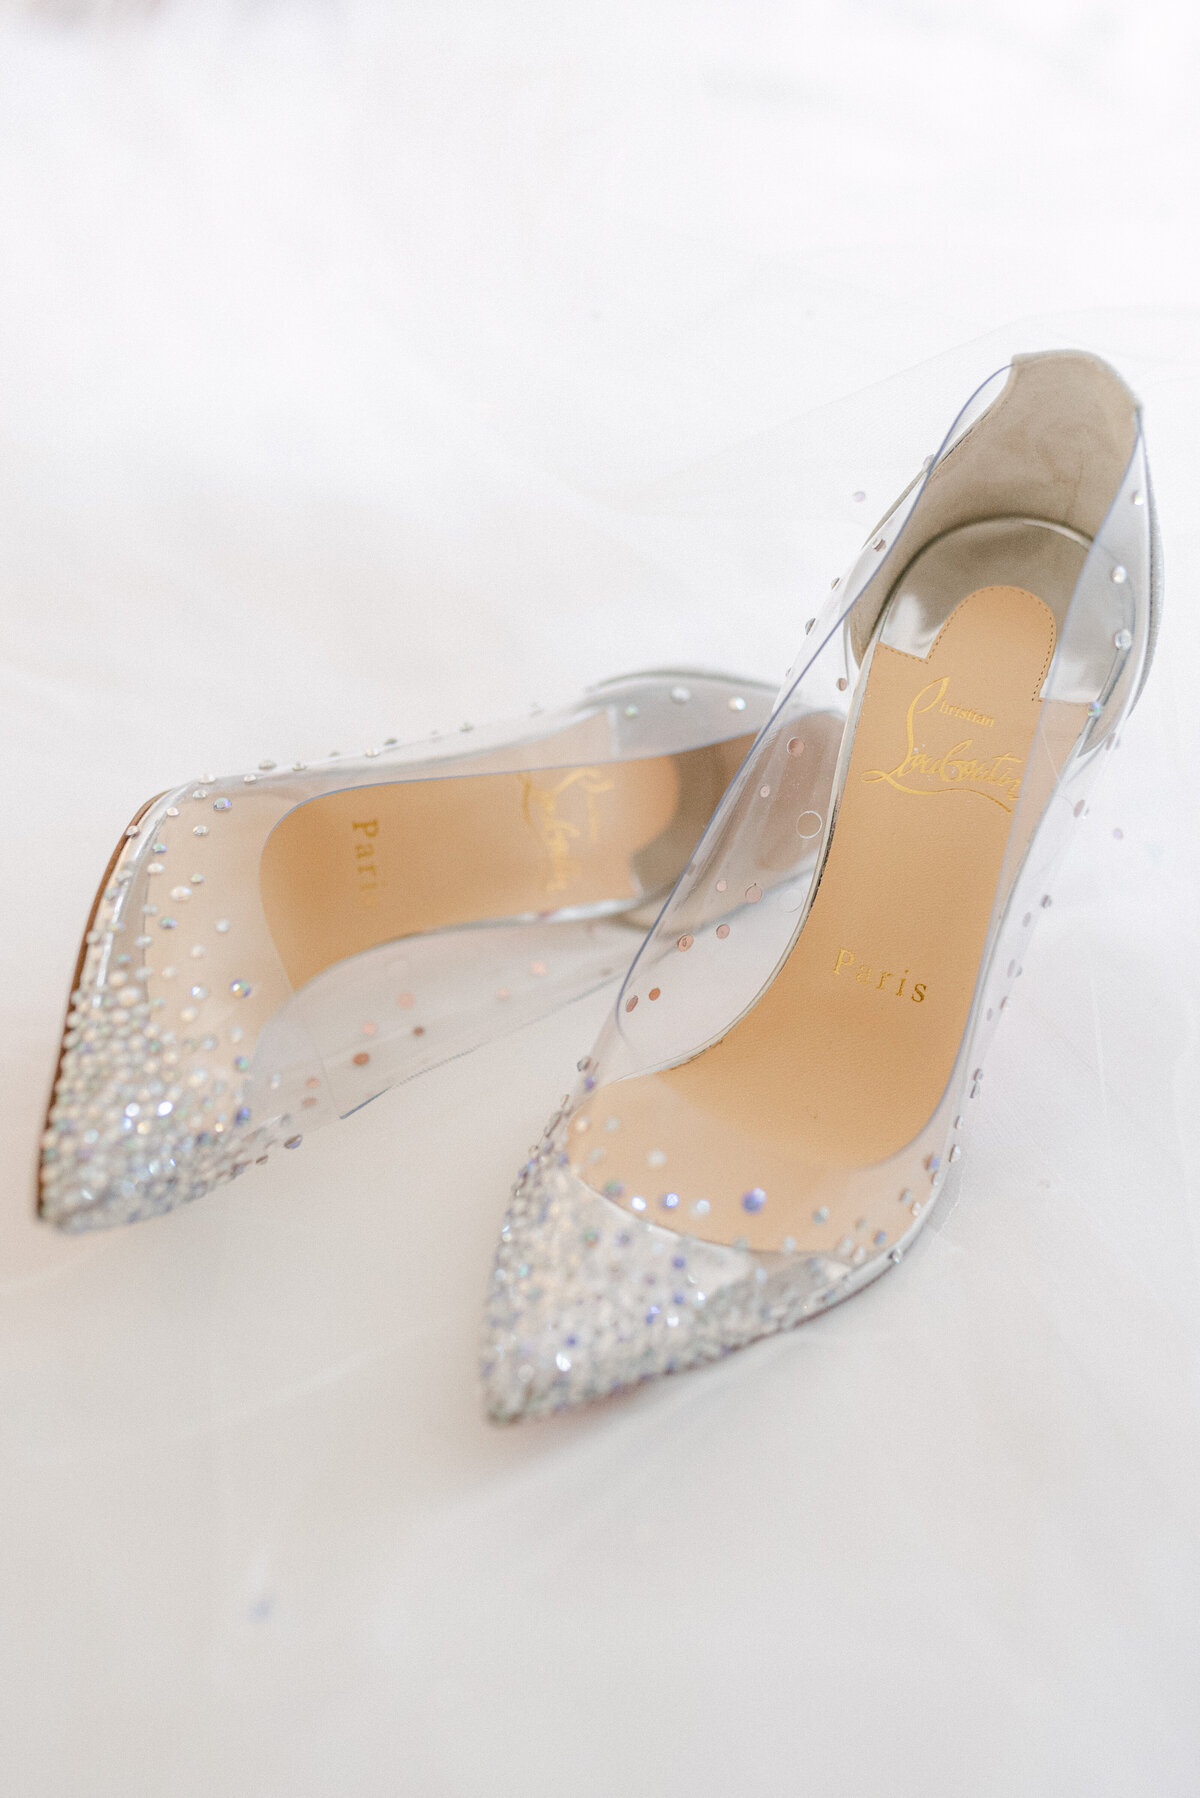 Christian Louboutin bridal shoes